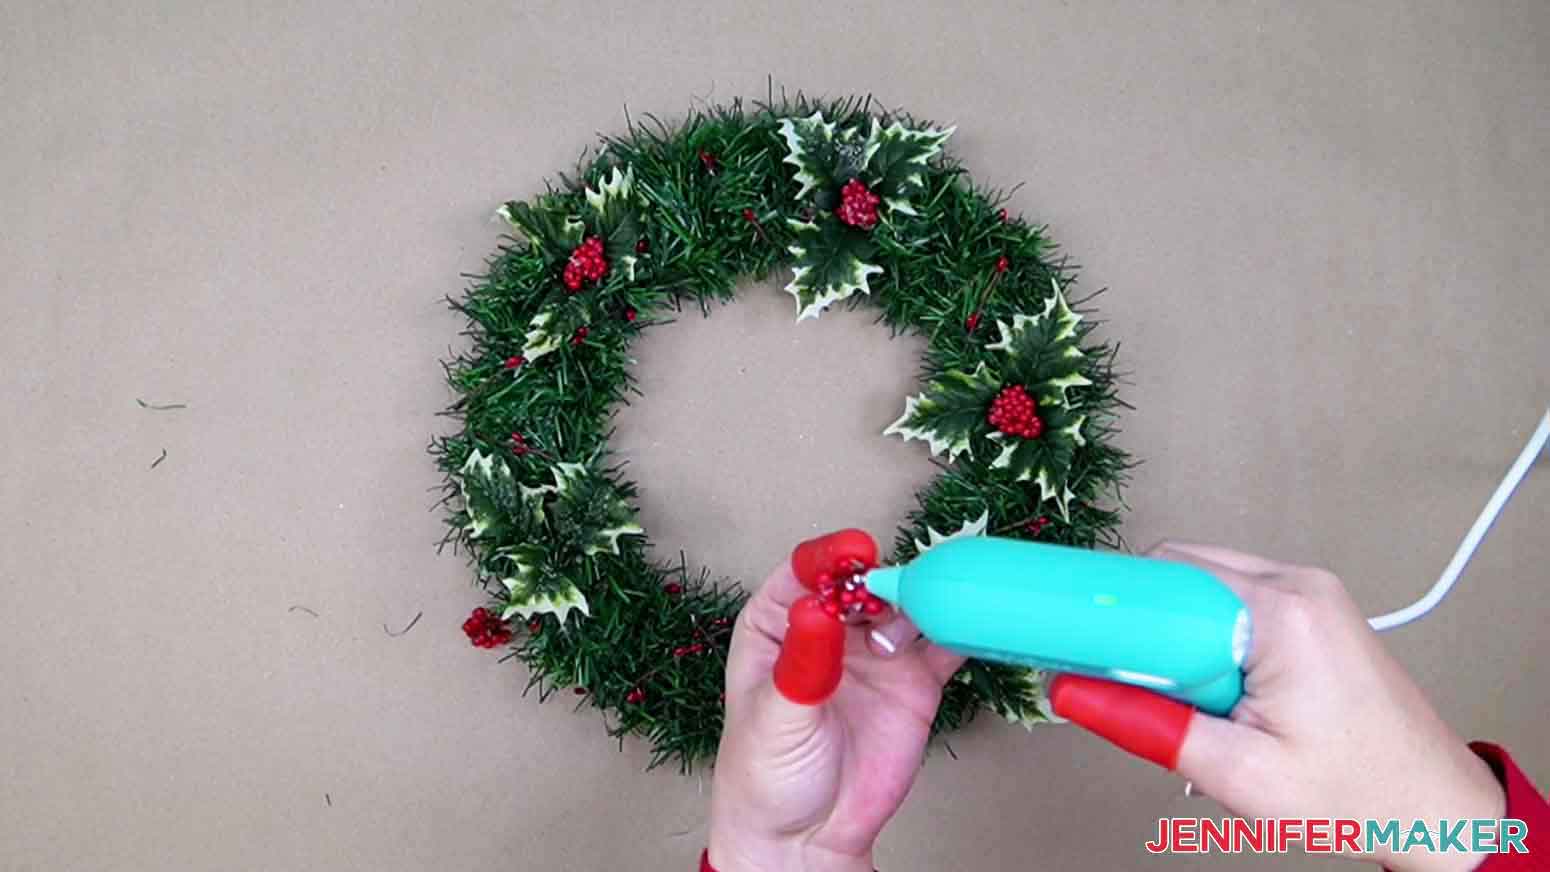 Use a hot glue gun to glue decoration pieces to garland.